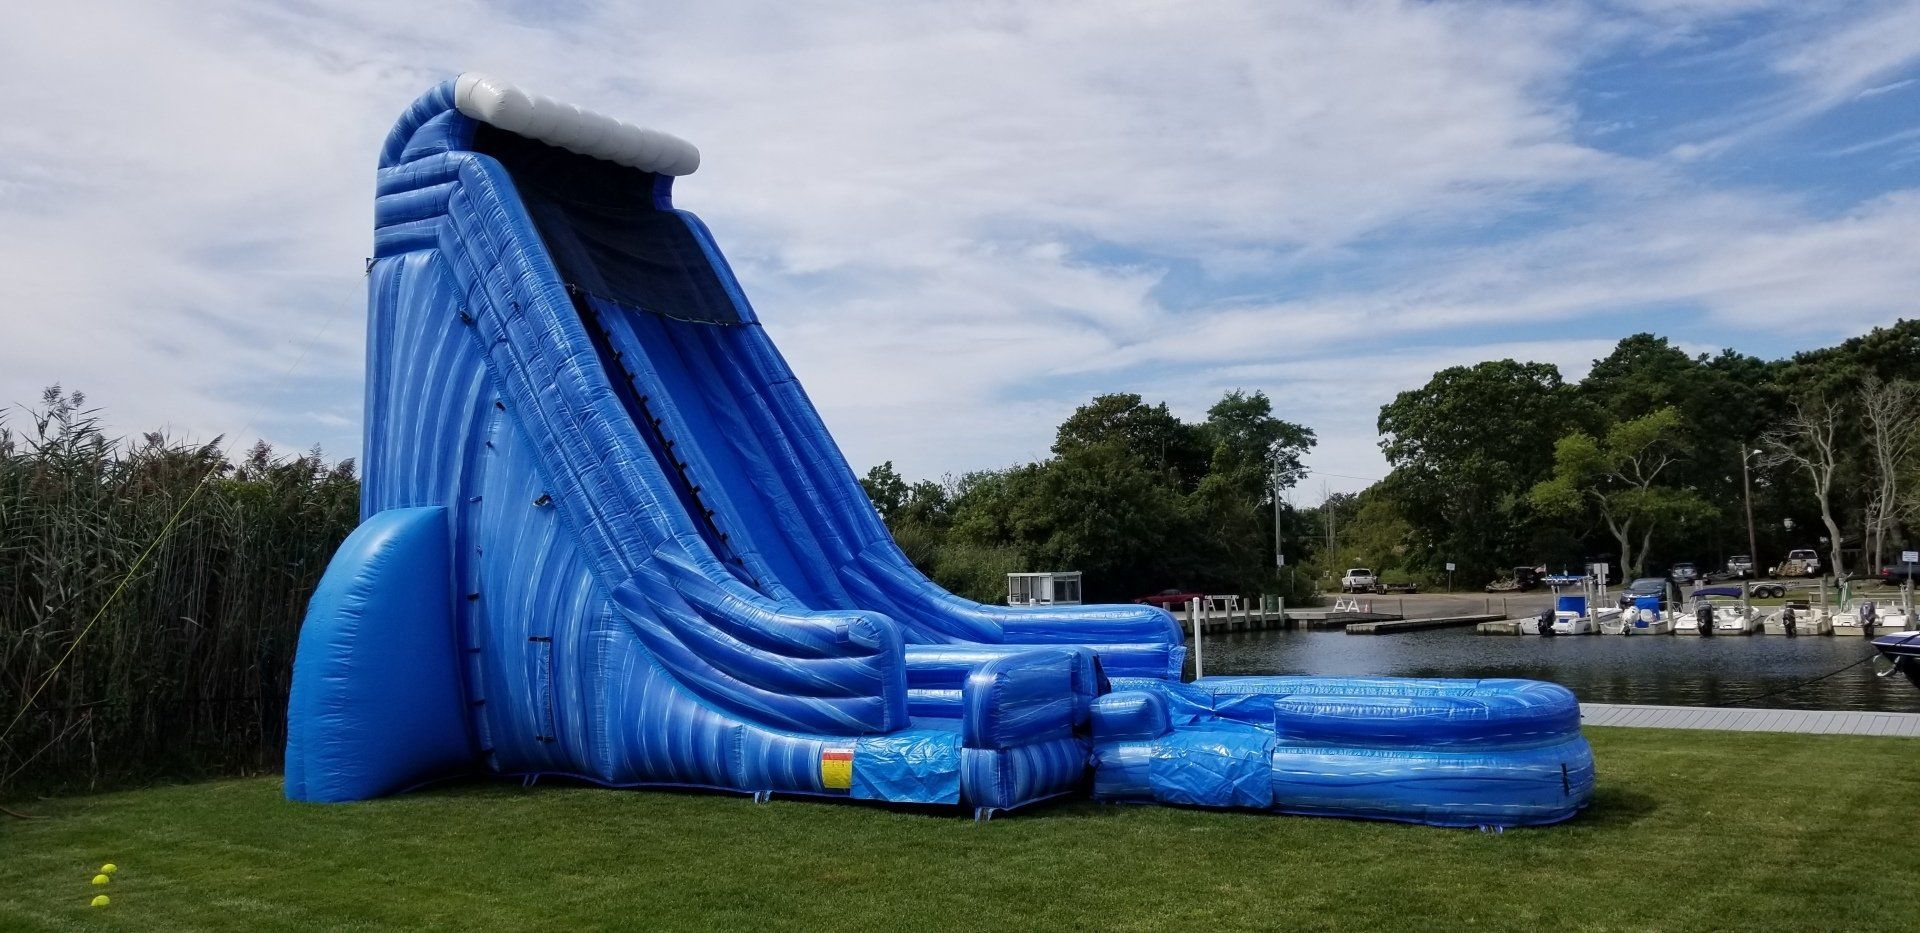 27' inflatables single lane water slide with splash pool.